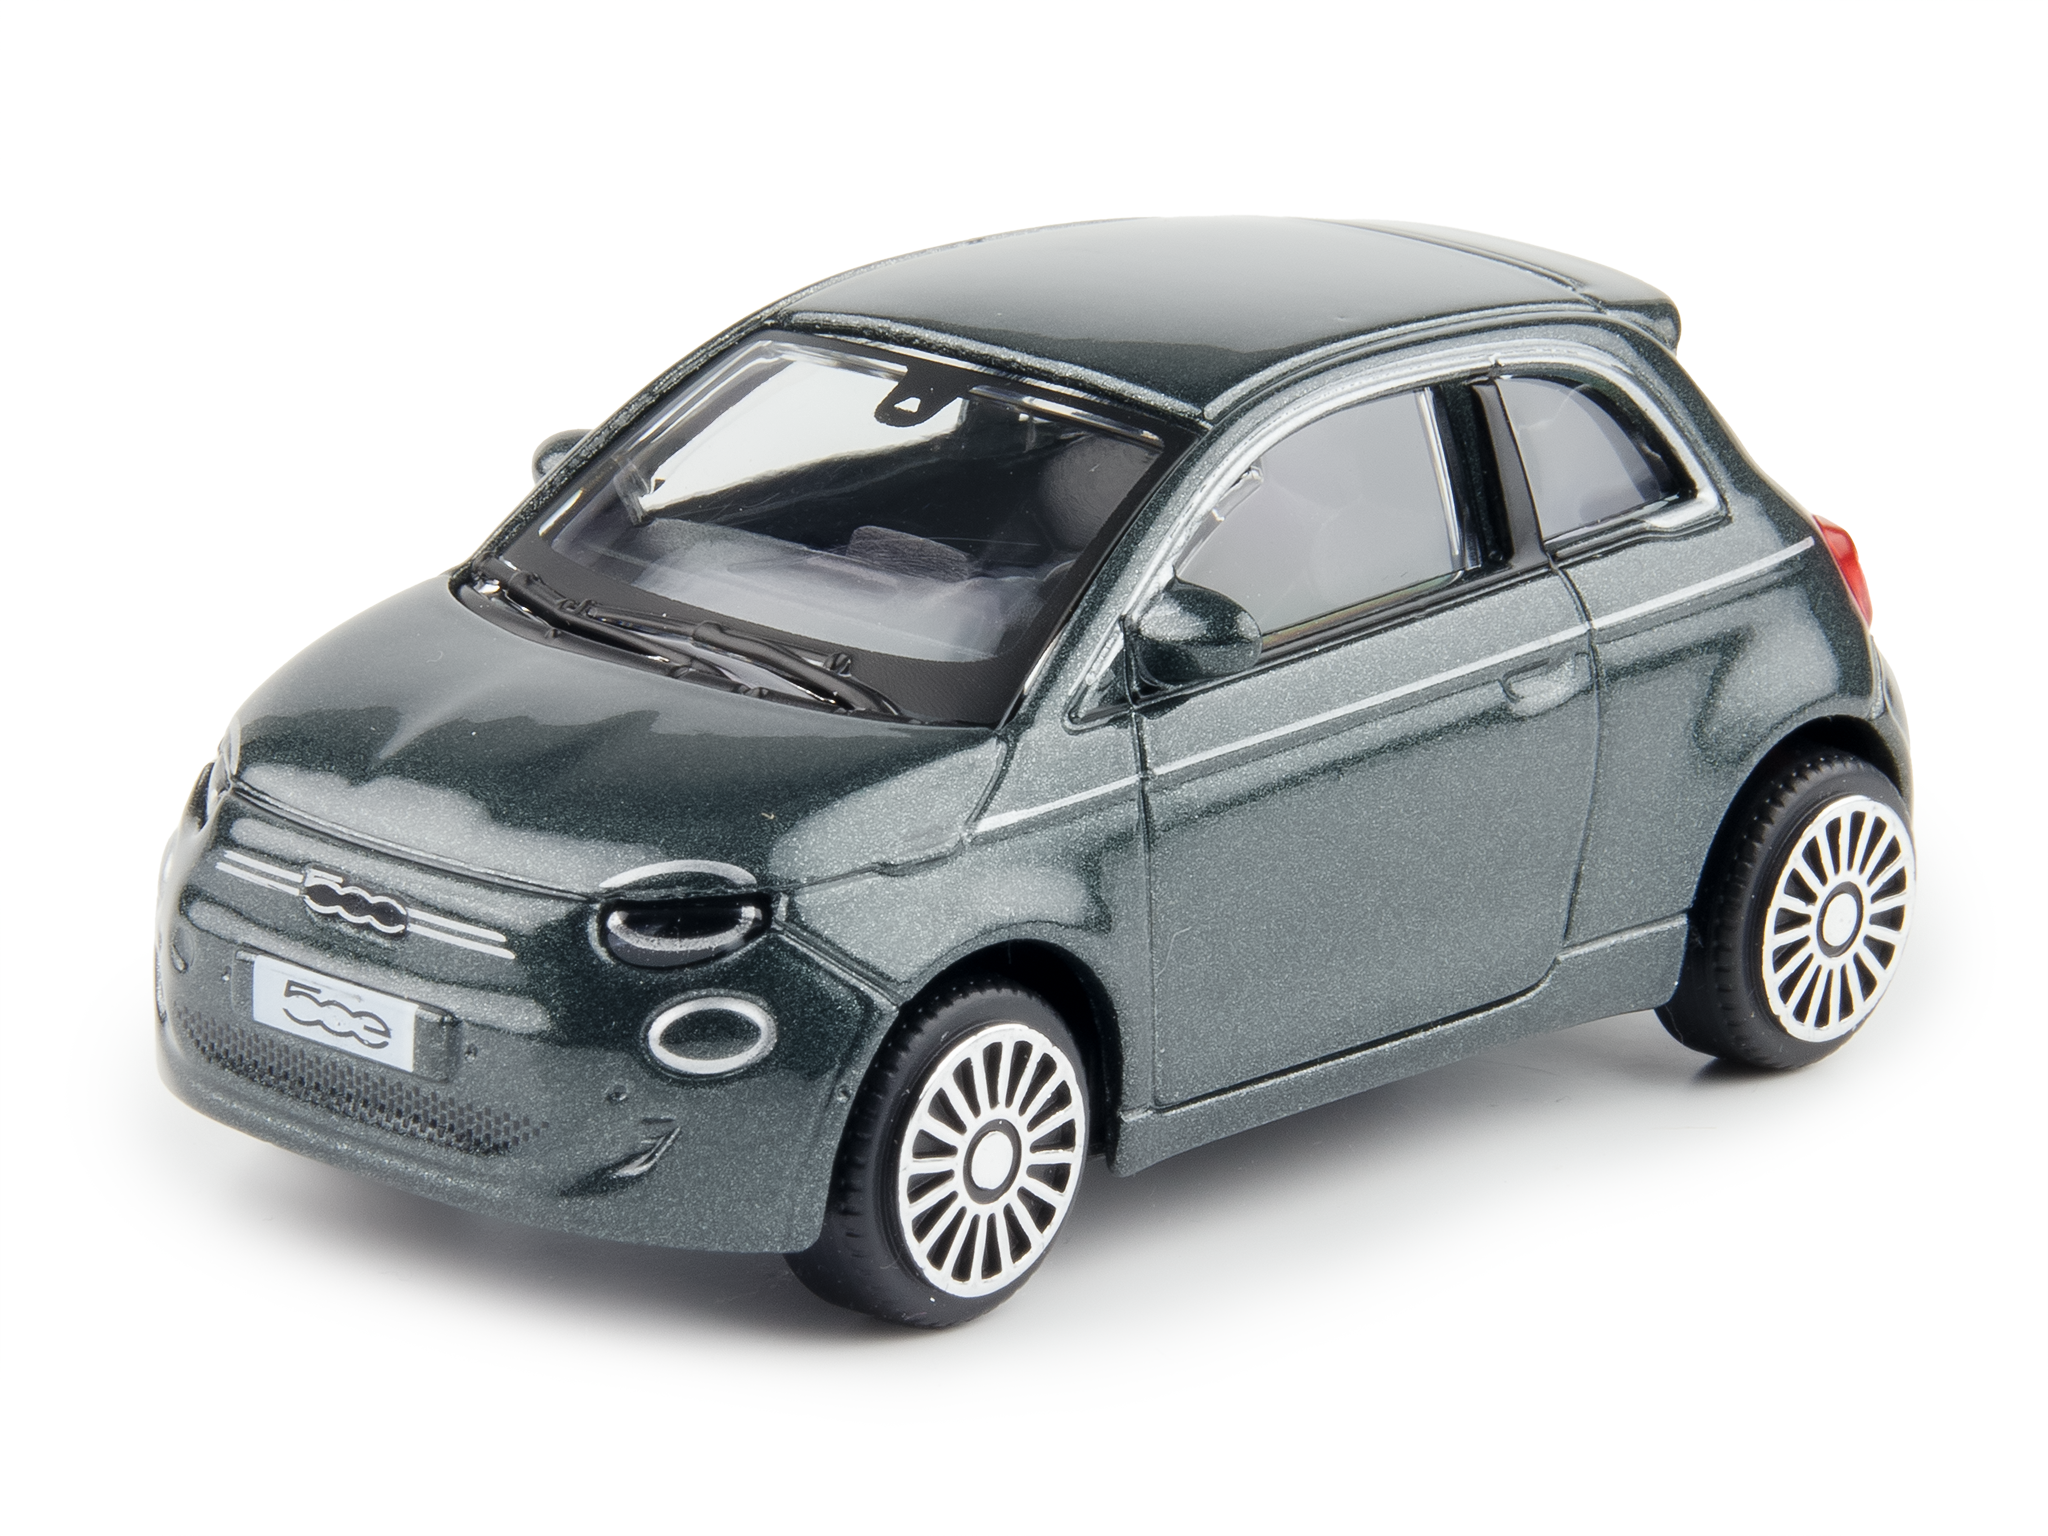 Fiat 500 La Prima dark grey metallic - 1:43 Scale Diecast Toy Car